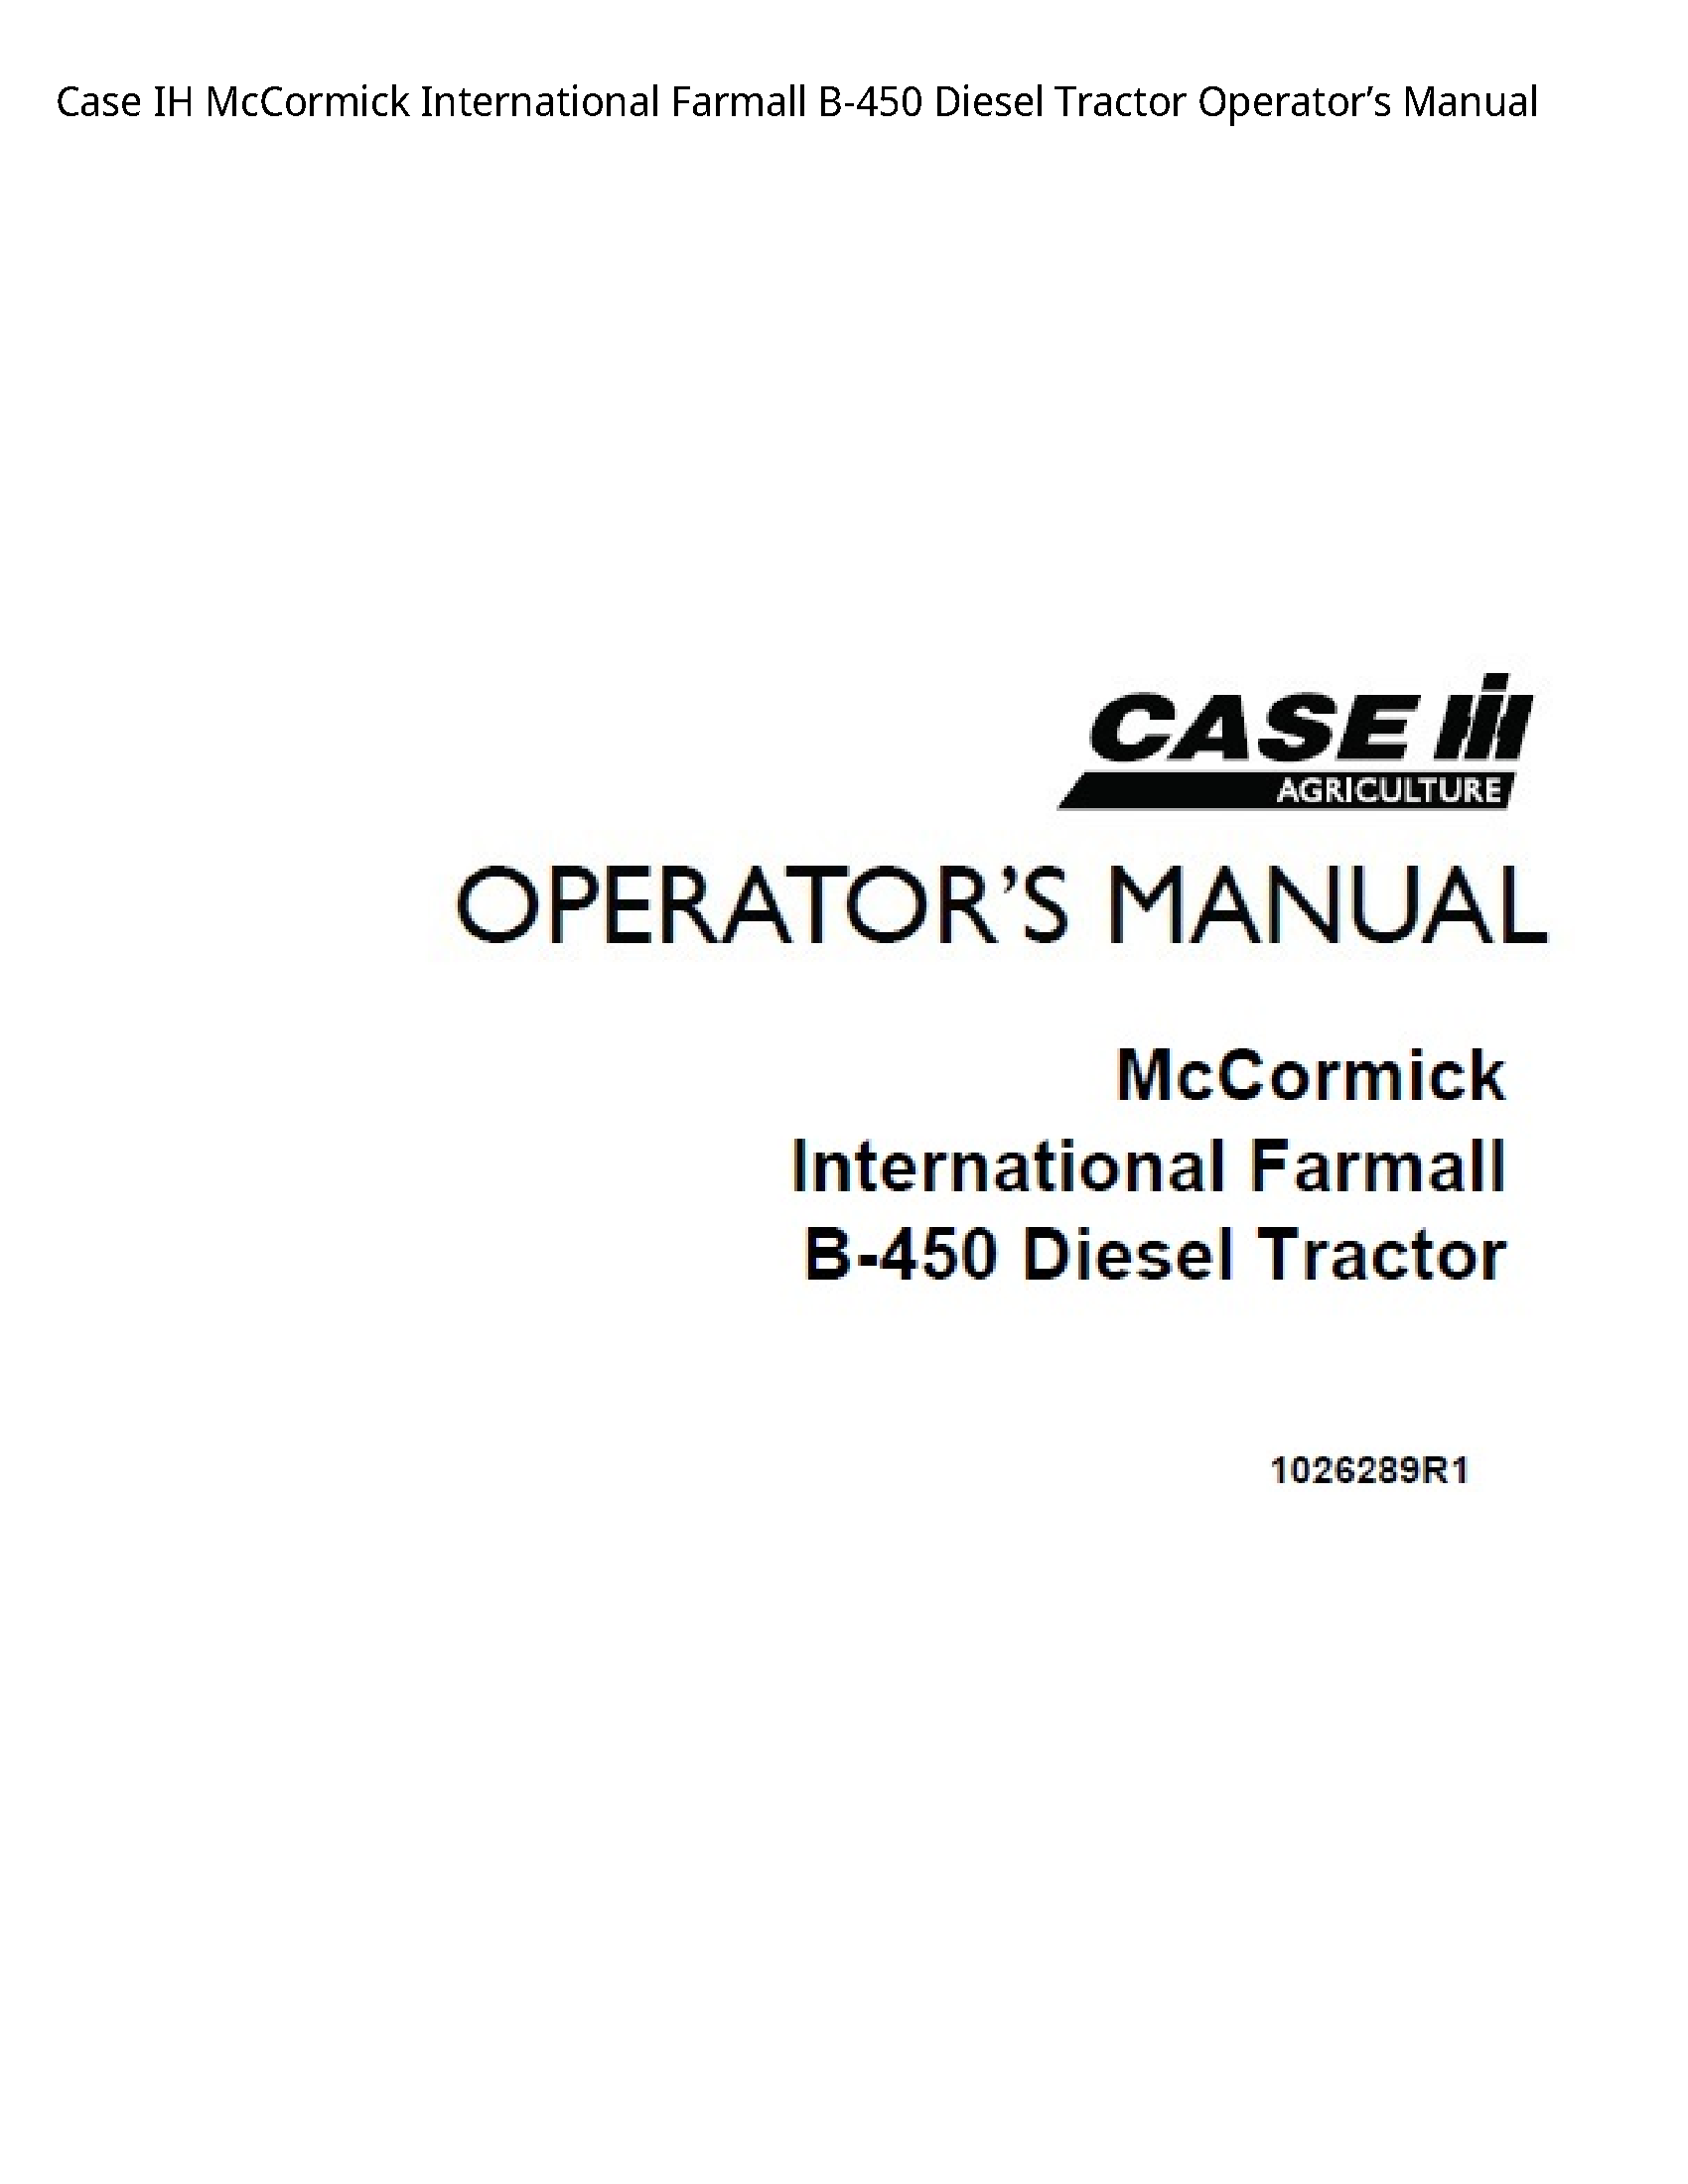 Case/Case IH B-450 IH McCormick International Farmall Diesel Tractor Operator’s manual